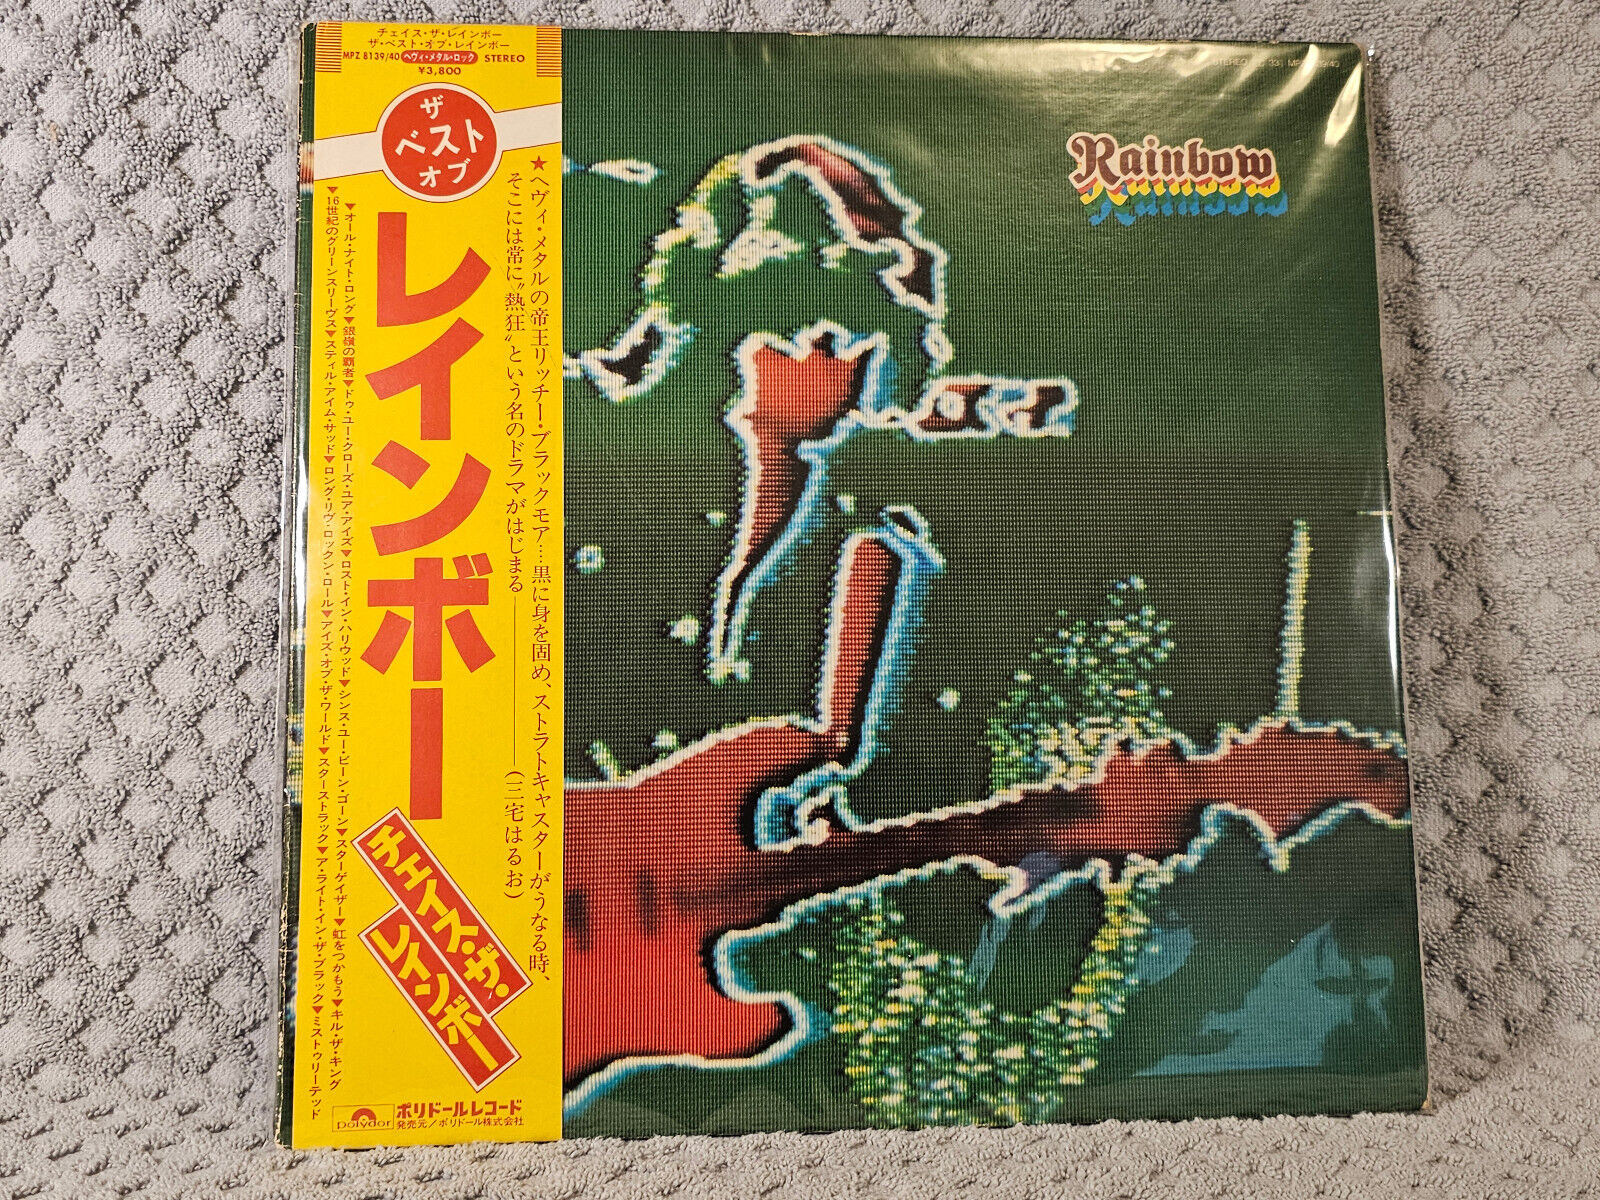 Rainbow - The Best of Rainbow Japan OBI Vinyl 2 LP Polydor MPZ 8139/40